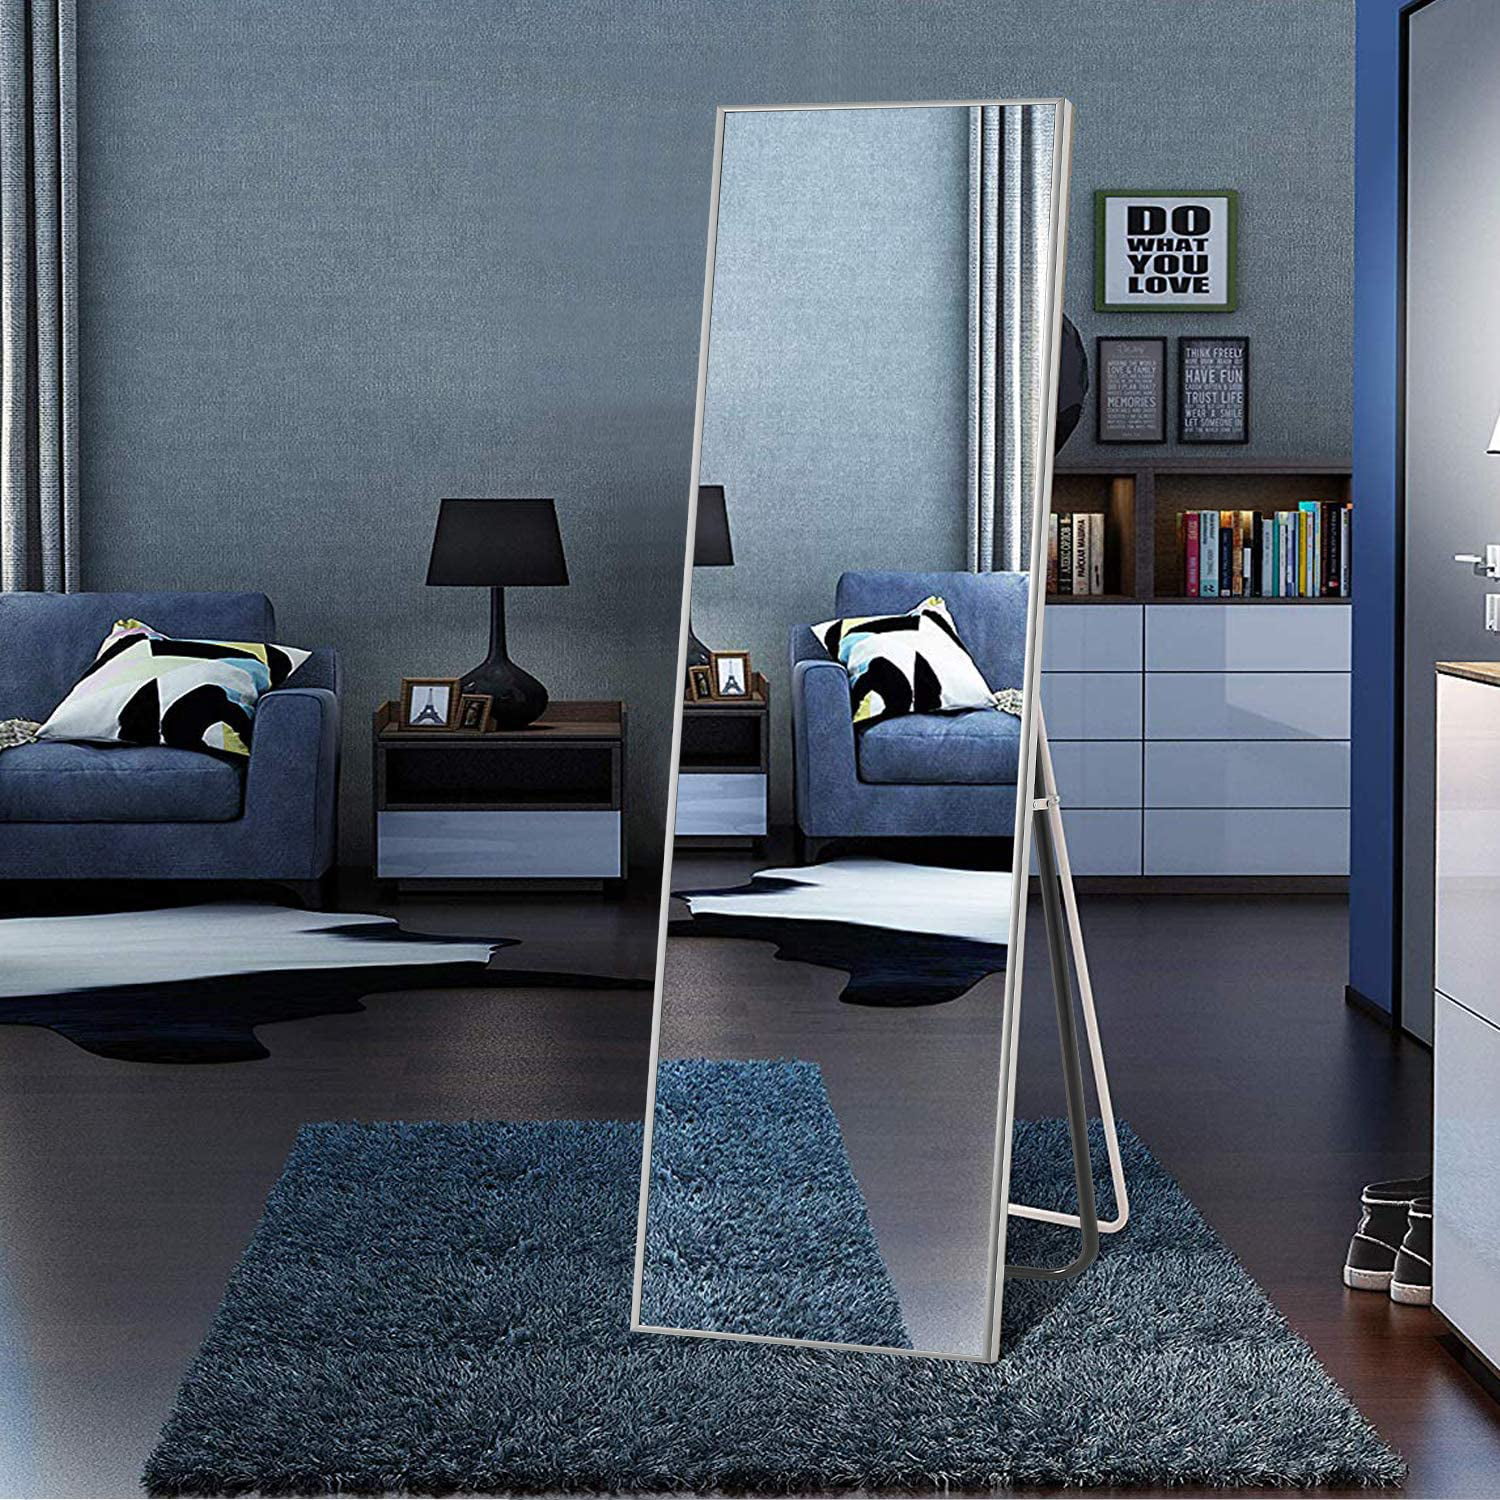 Full Length Mirror Floor Decor Mirror Hanging/Leaning Large Wall Mounted Mirror Horizontal